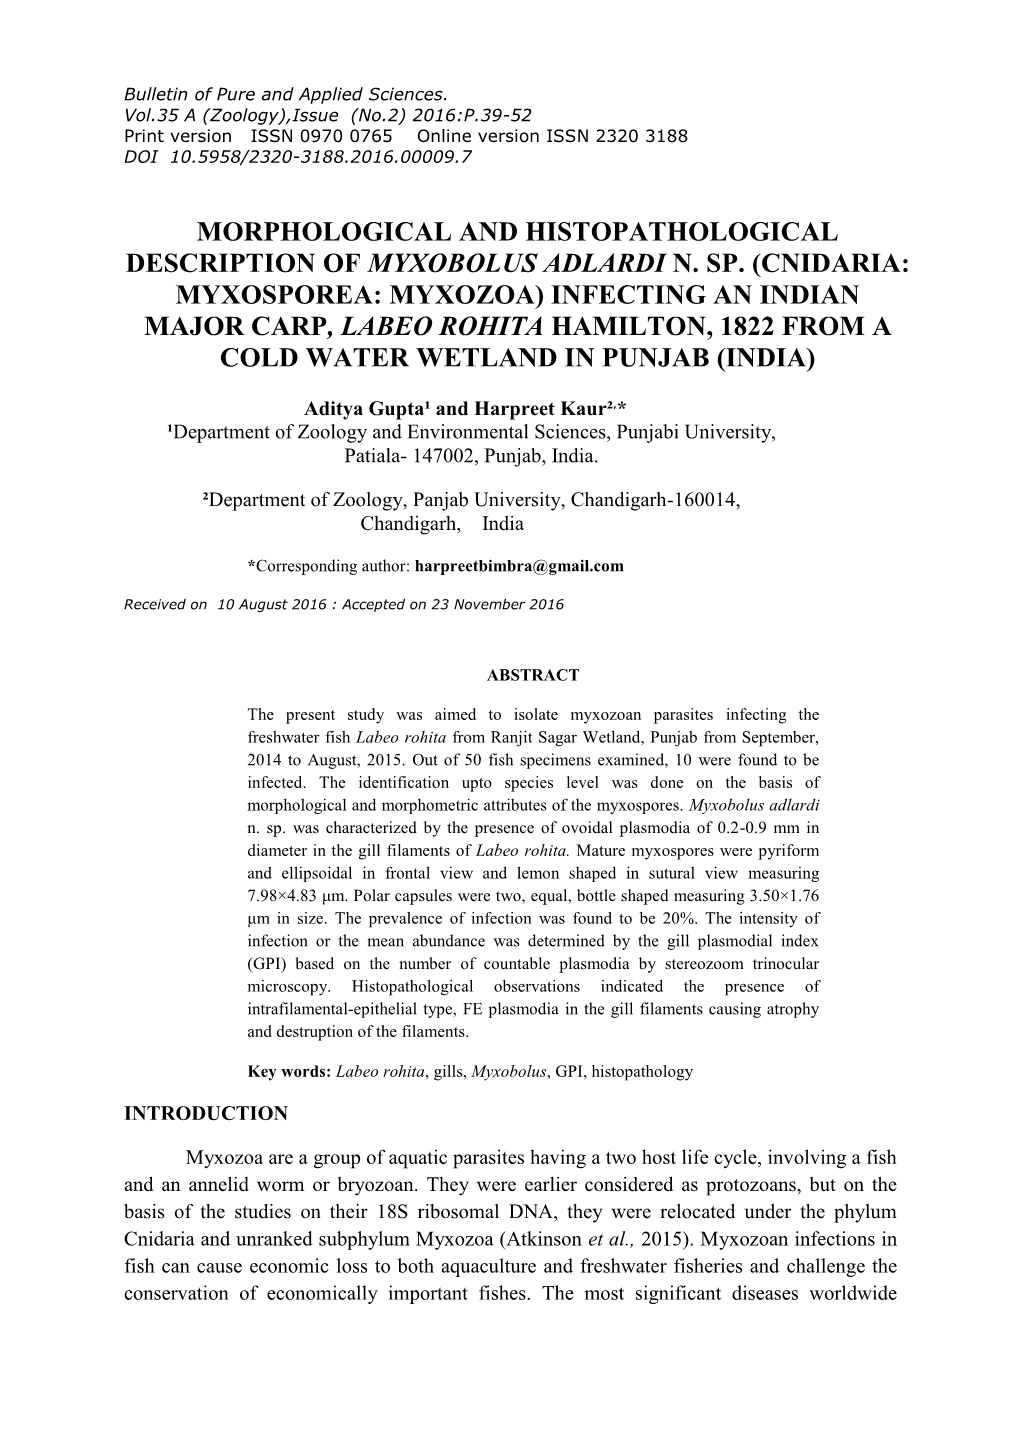 Morphological and Histopathological Description of Myxobolus Adlardi N